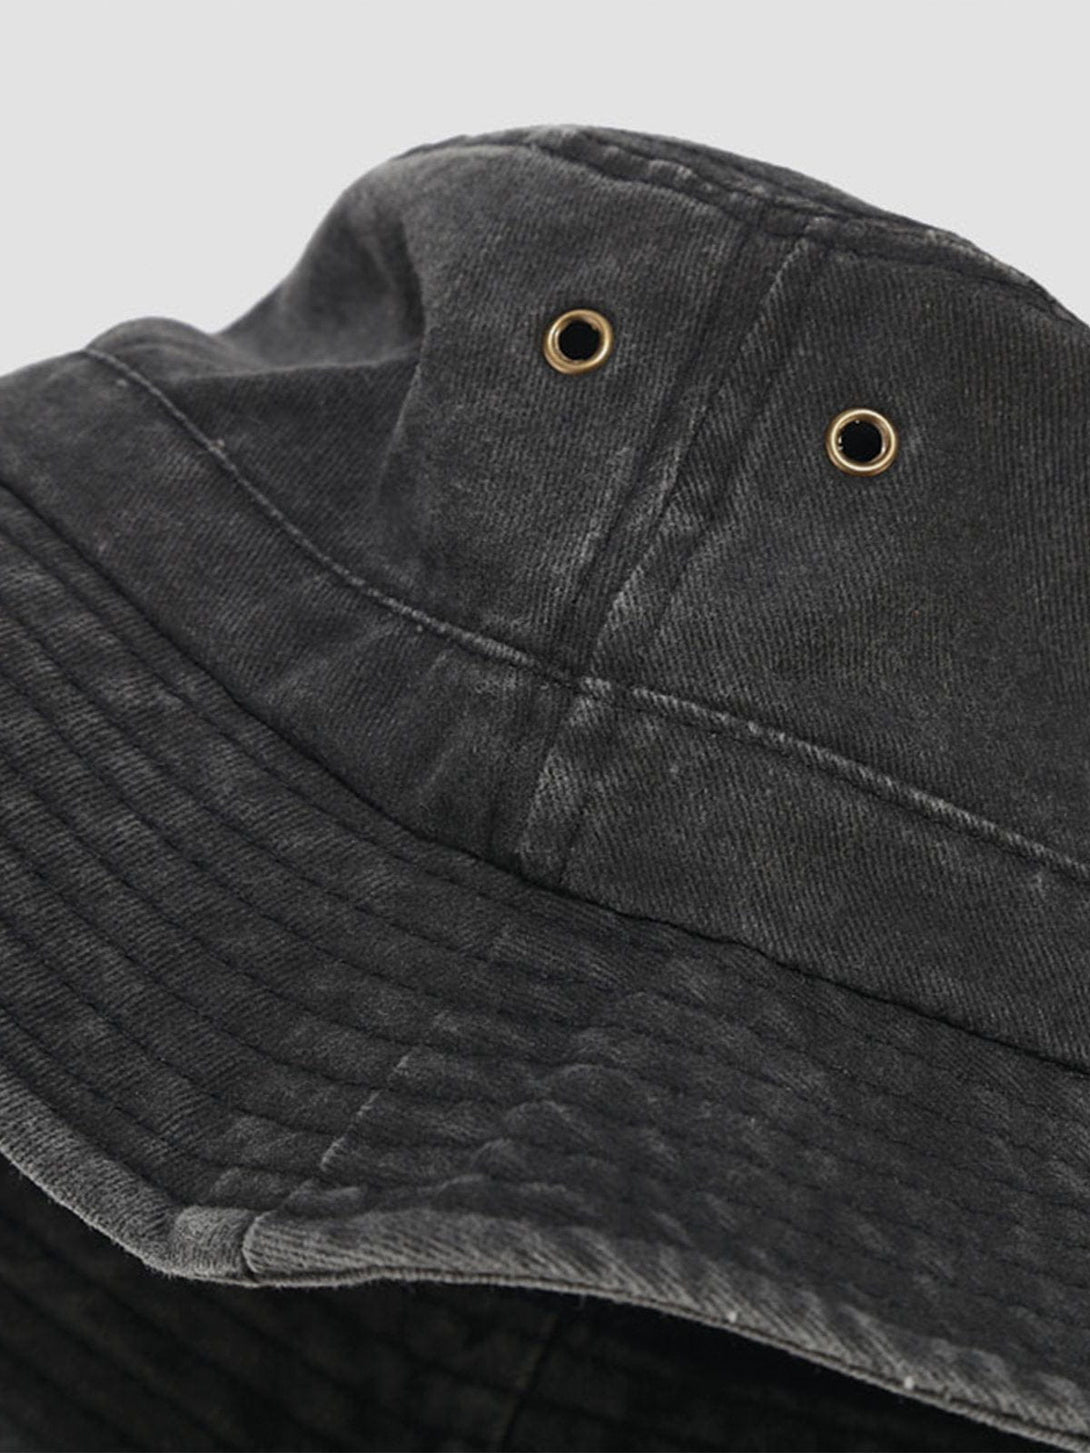 Majesda® - Vintage Washed Distressed Hat- Outfit Ideas - Streetwear Fashion - majesda.com